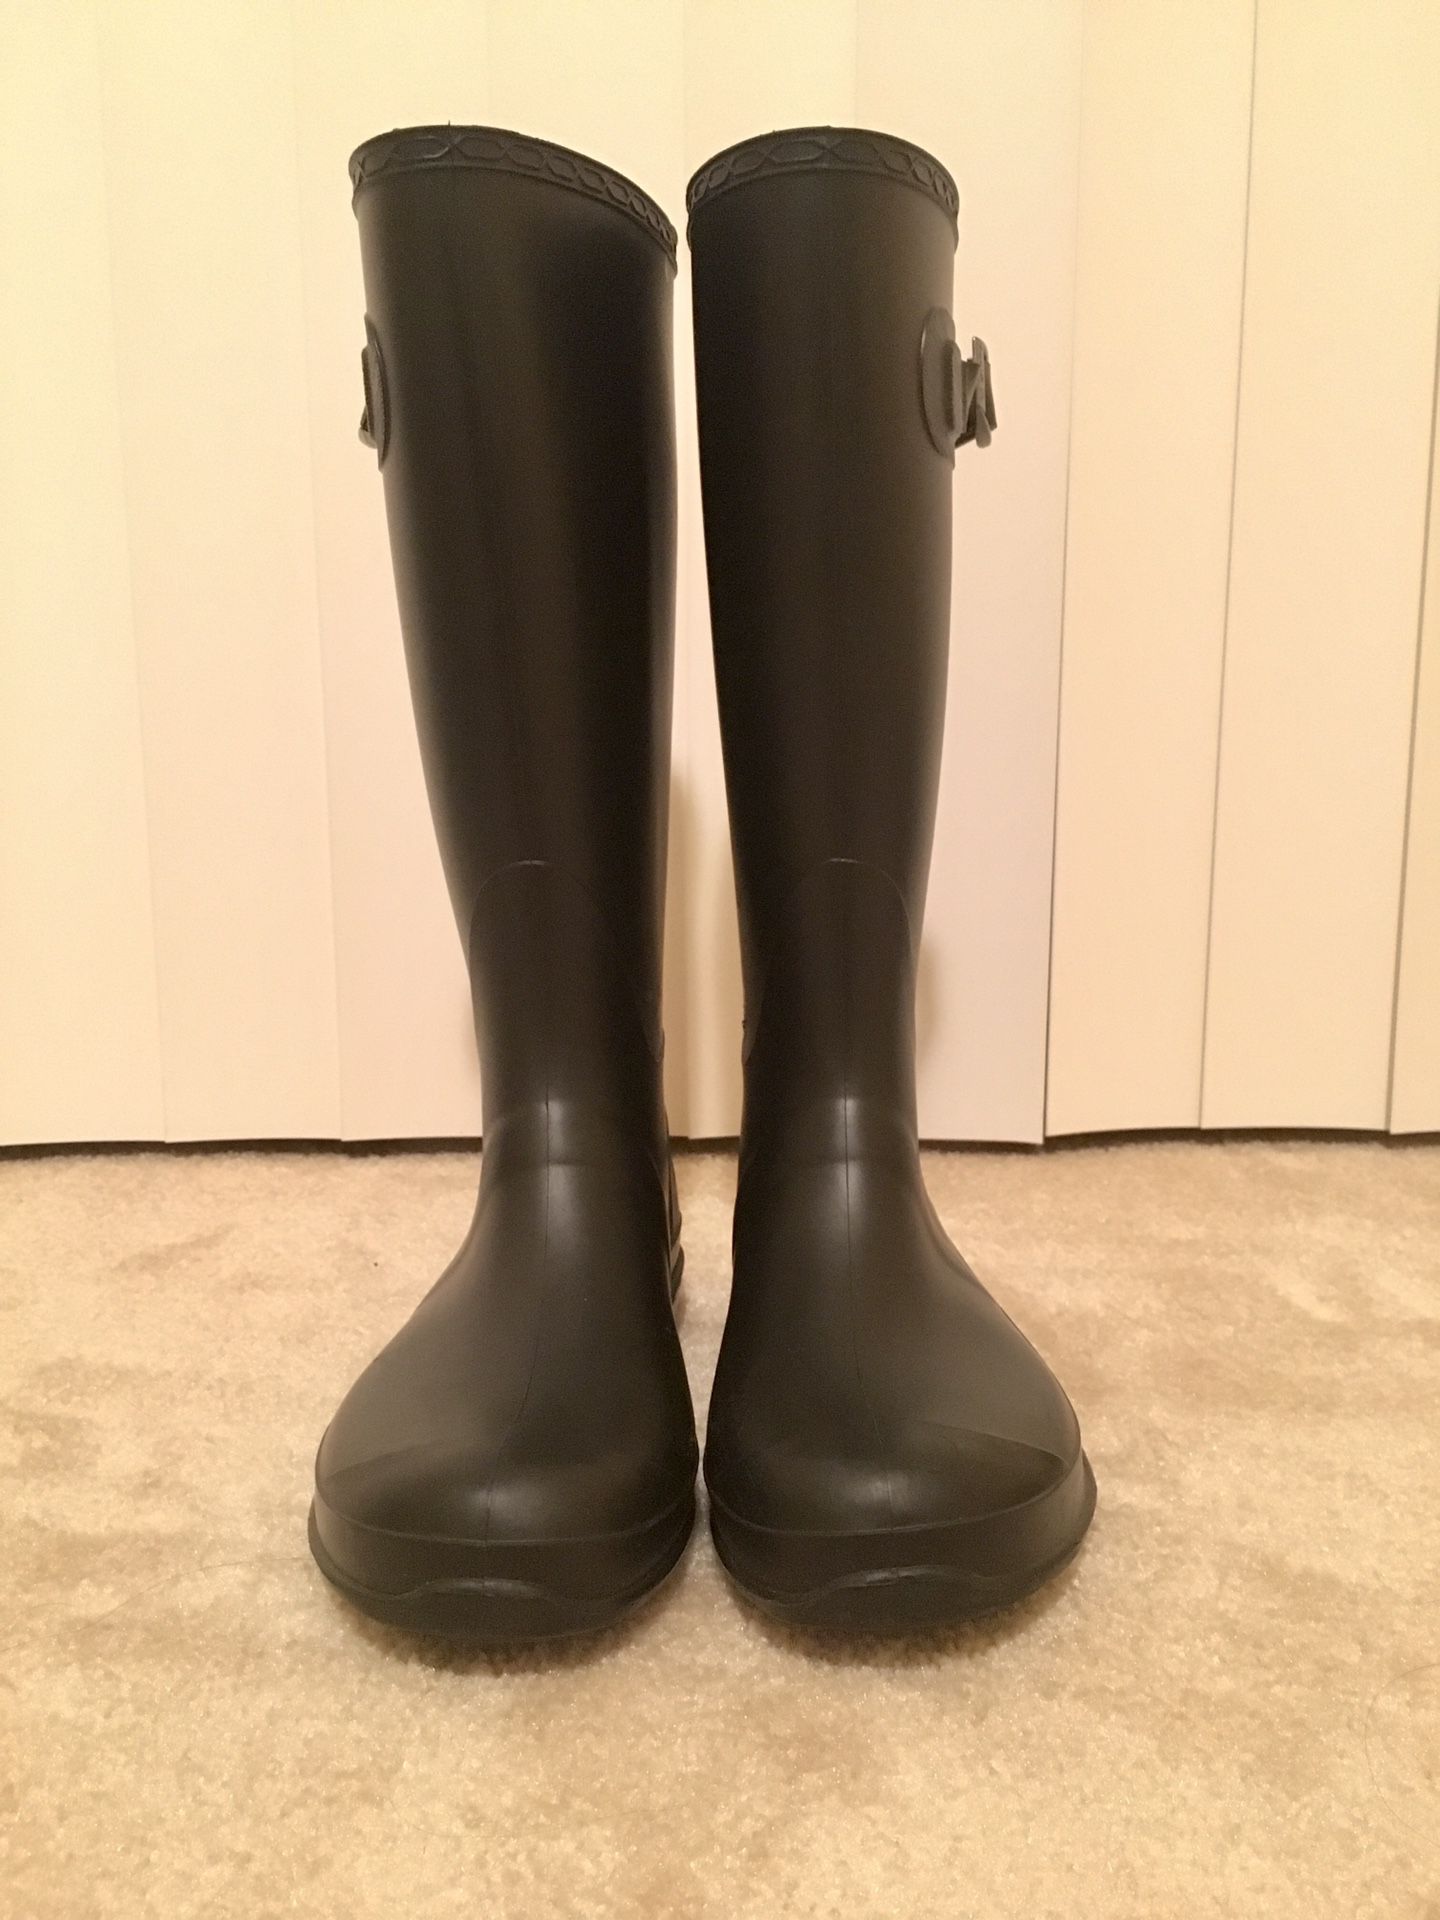 Women’s Rain Boots (Kamik) Size 7